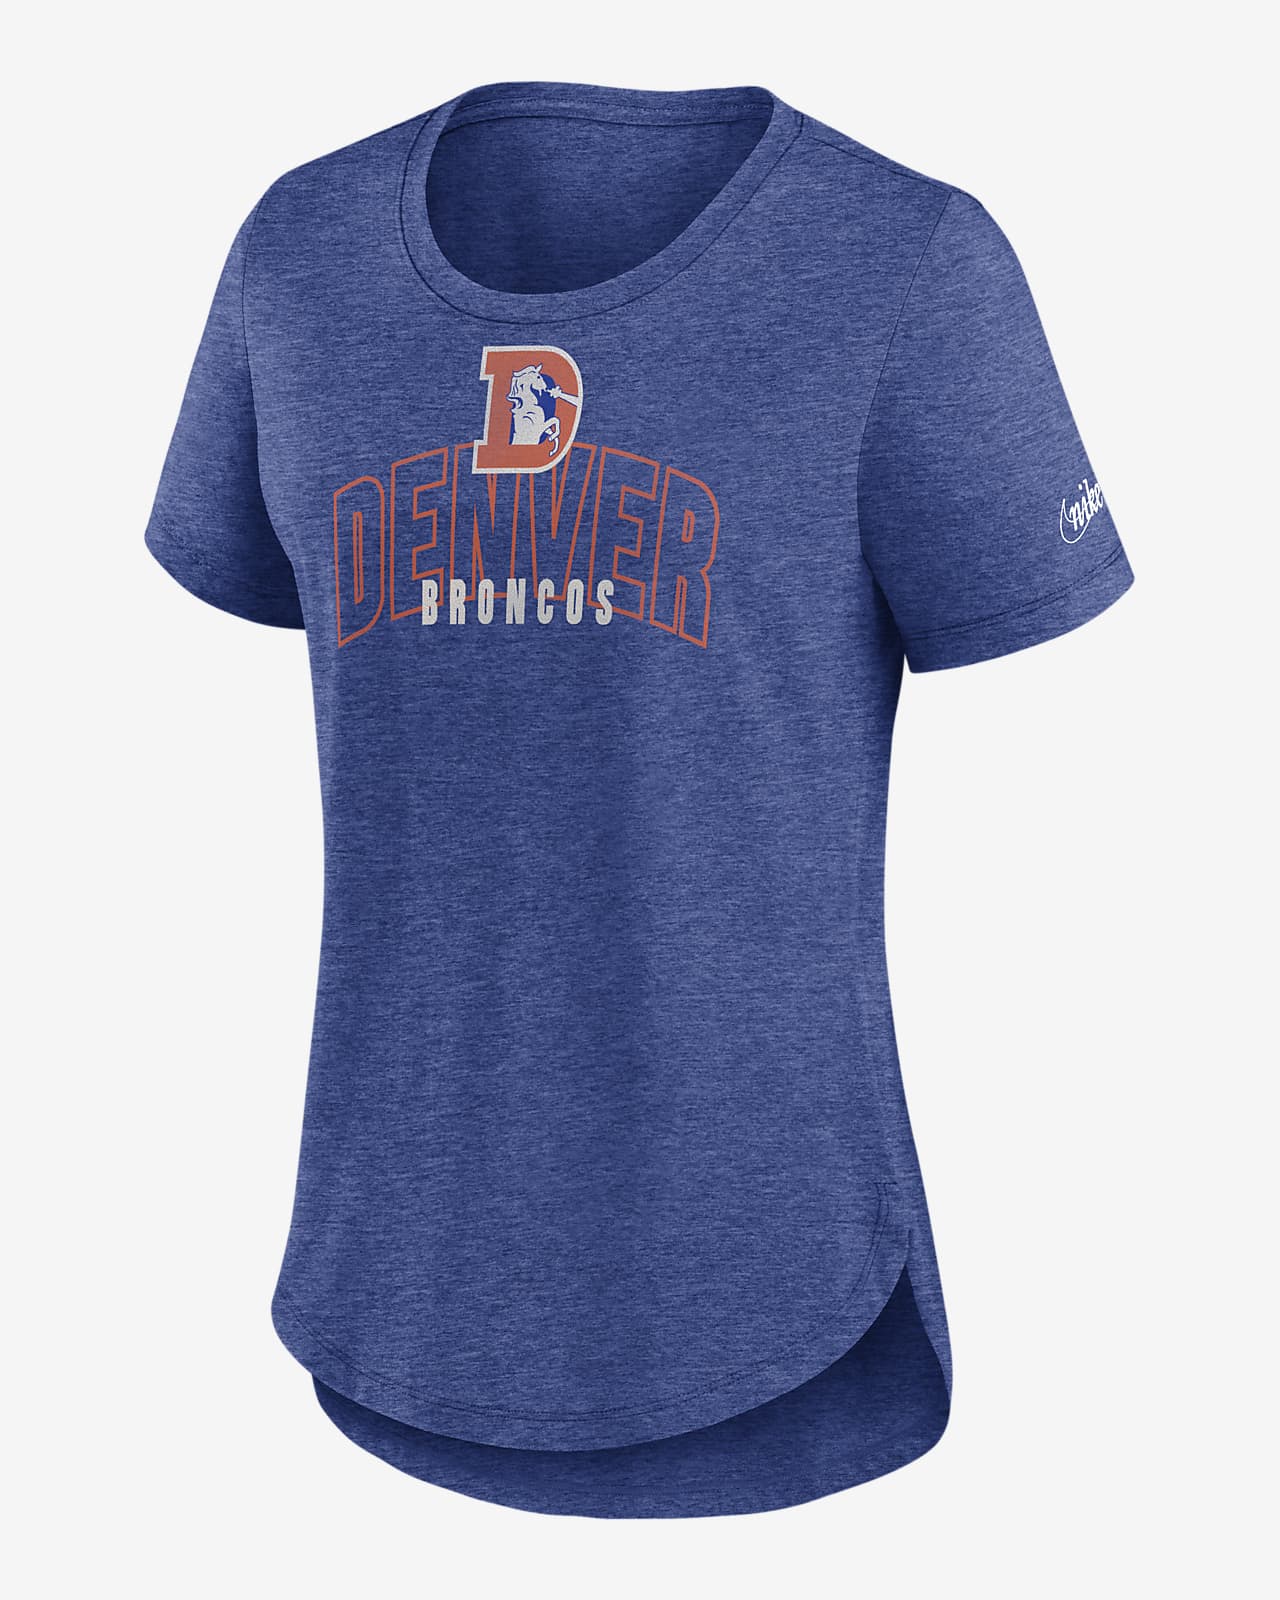 Nike Fashion (NFL Denver Broncos) Women's T-Shirt.